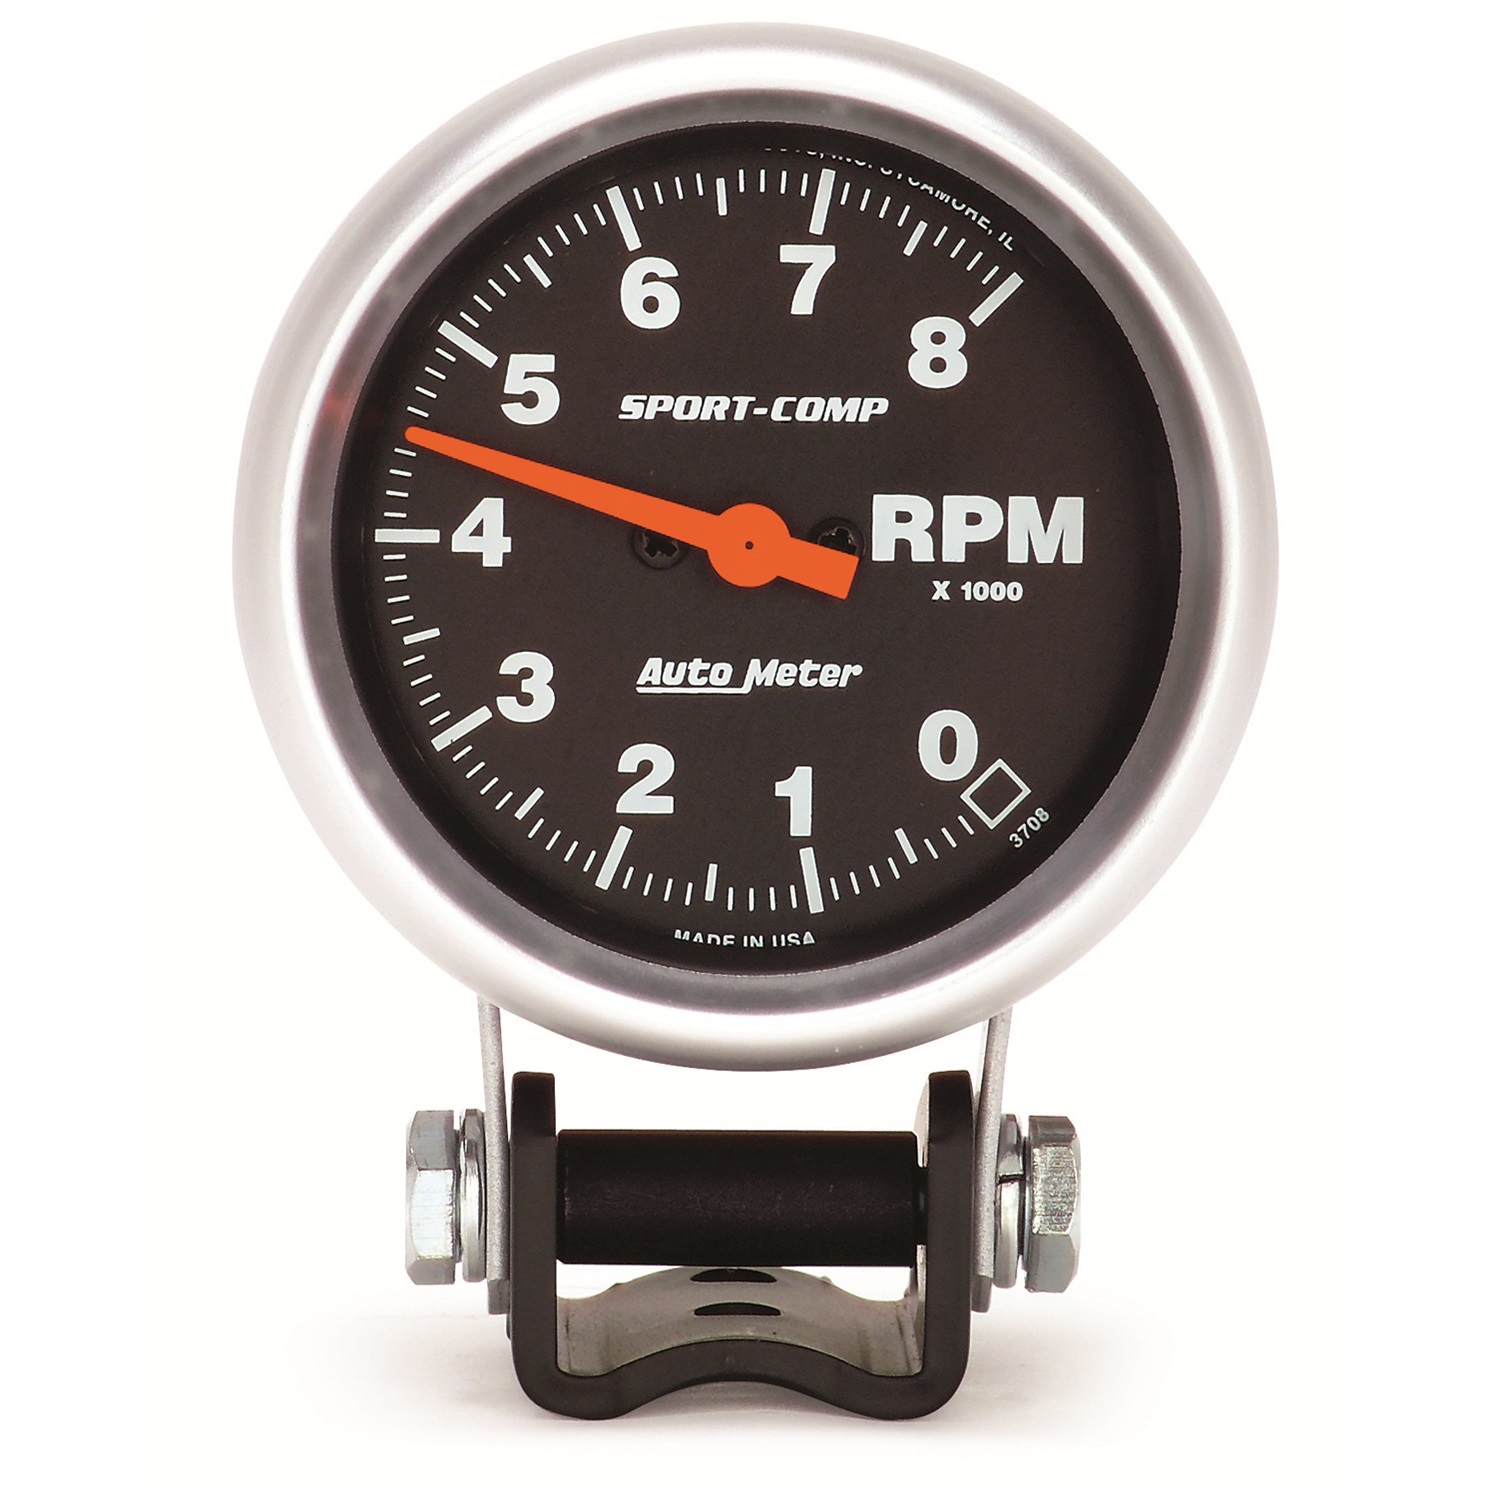 Auto Meter Auto Meter 3708 Sport-Comp; Mini Competition Tachometer